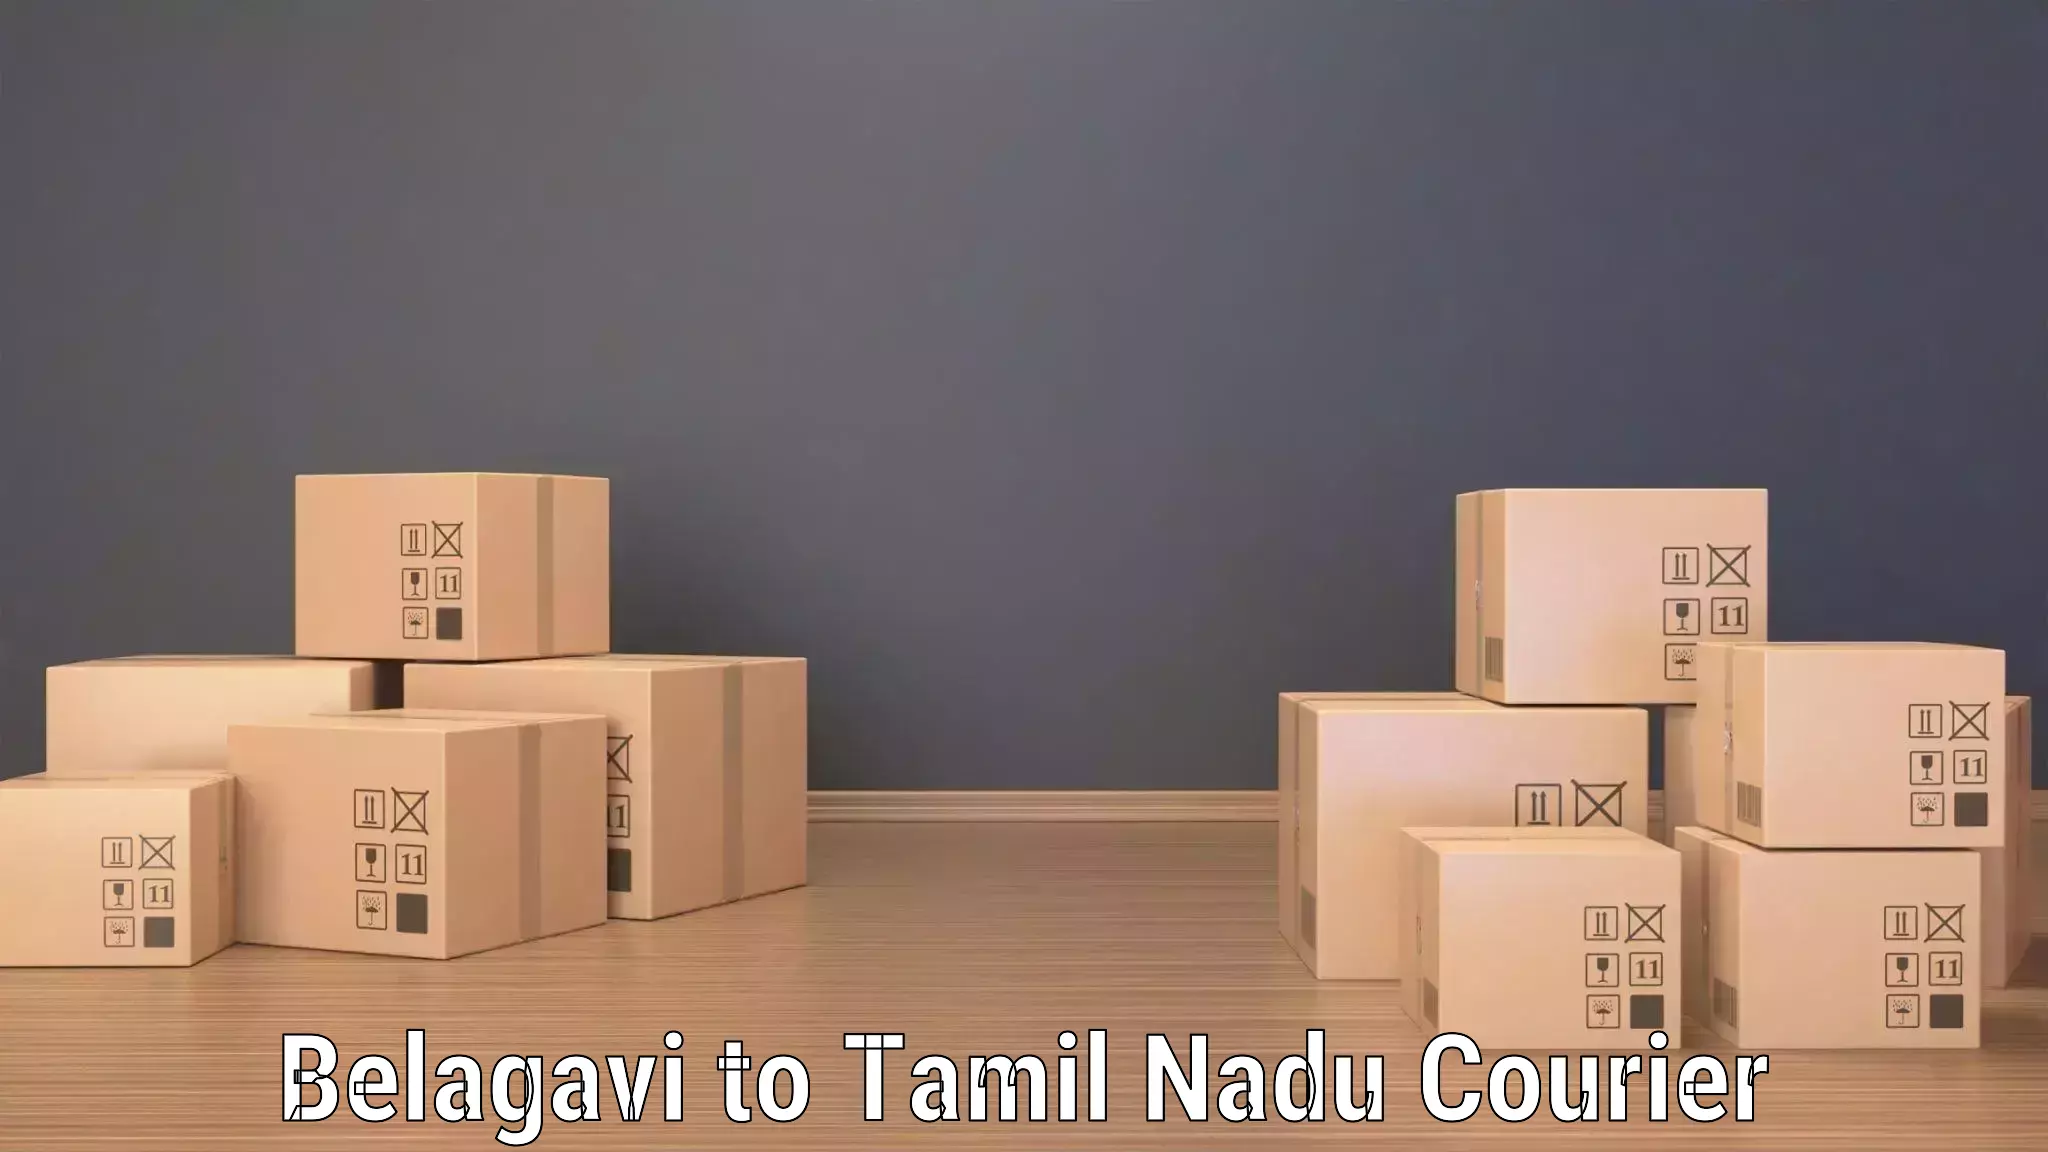 Express delivery capabilities in Belagavi to Thiruvadanai